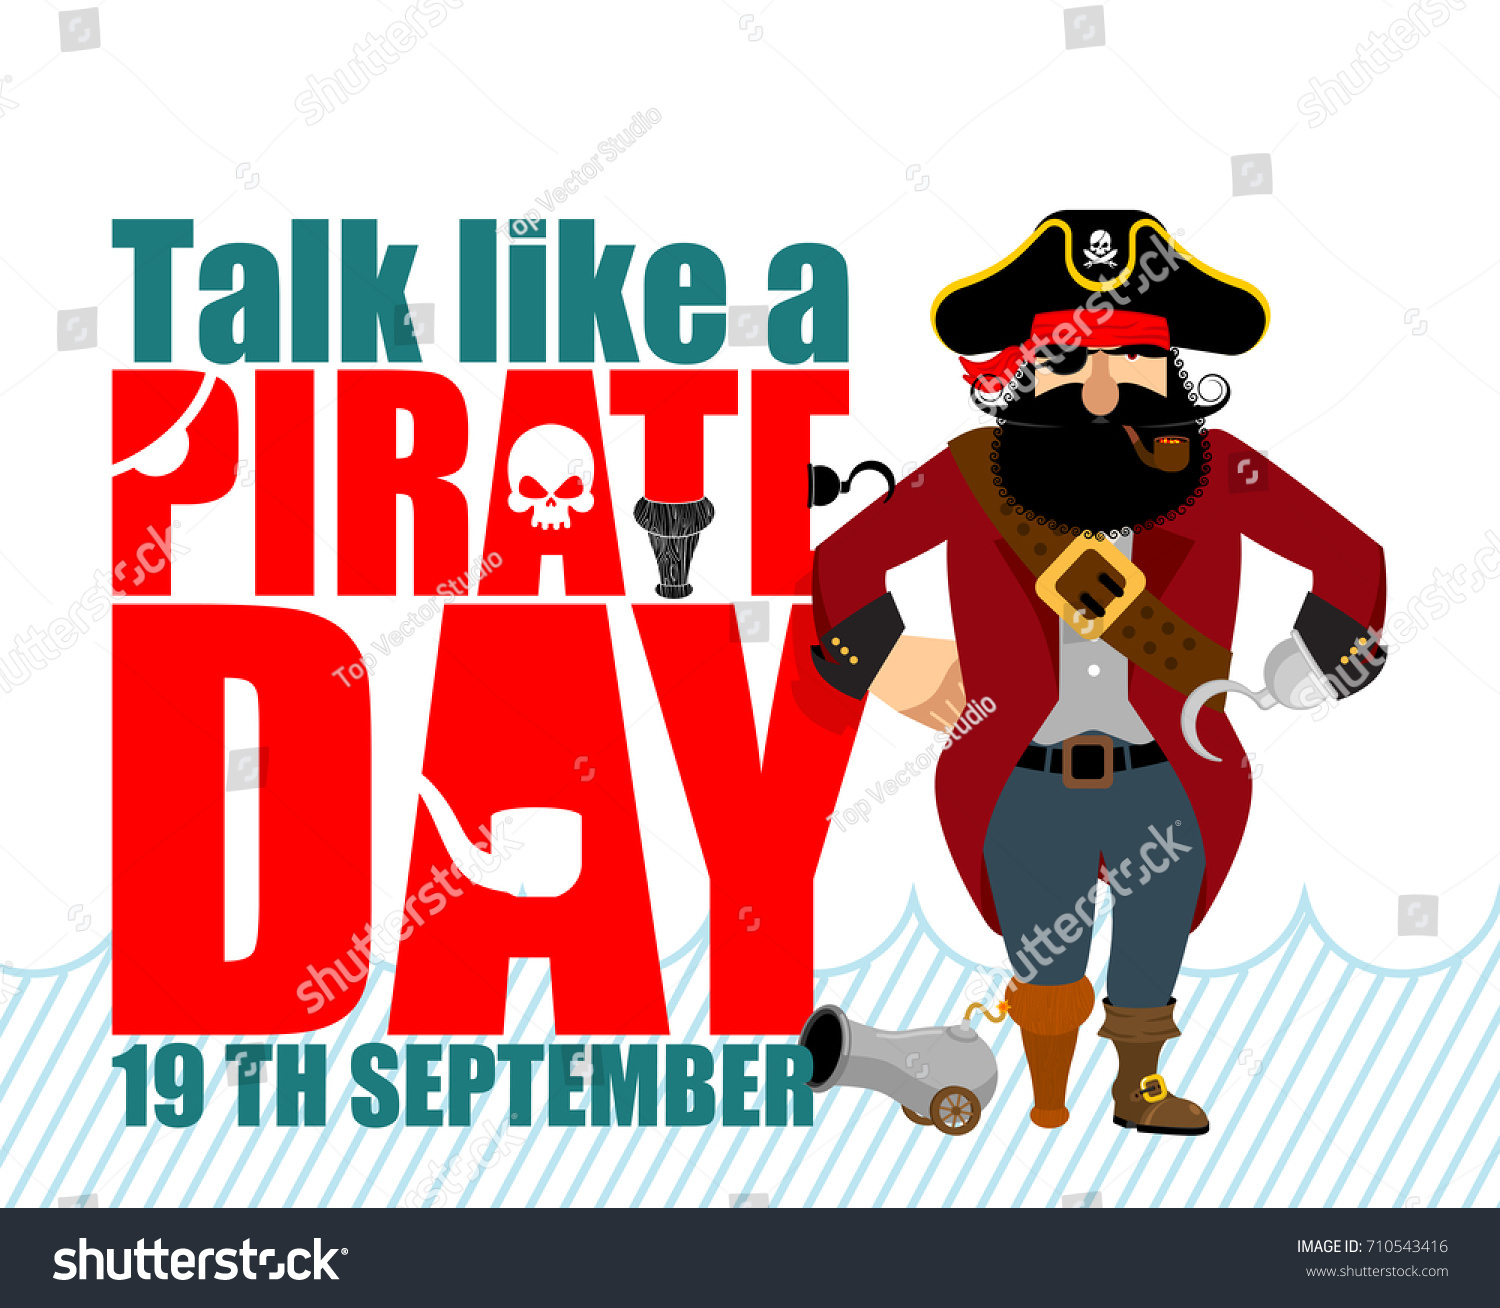 Talk like a pirate